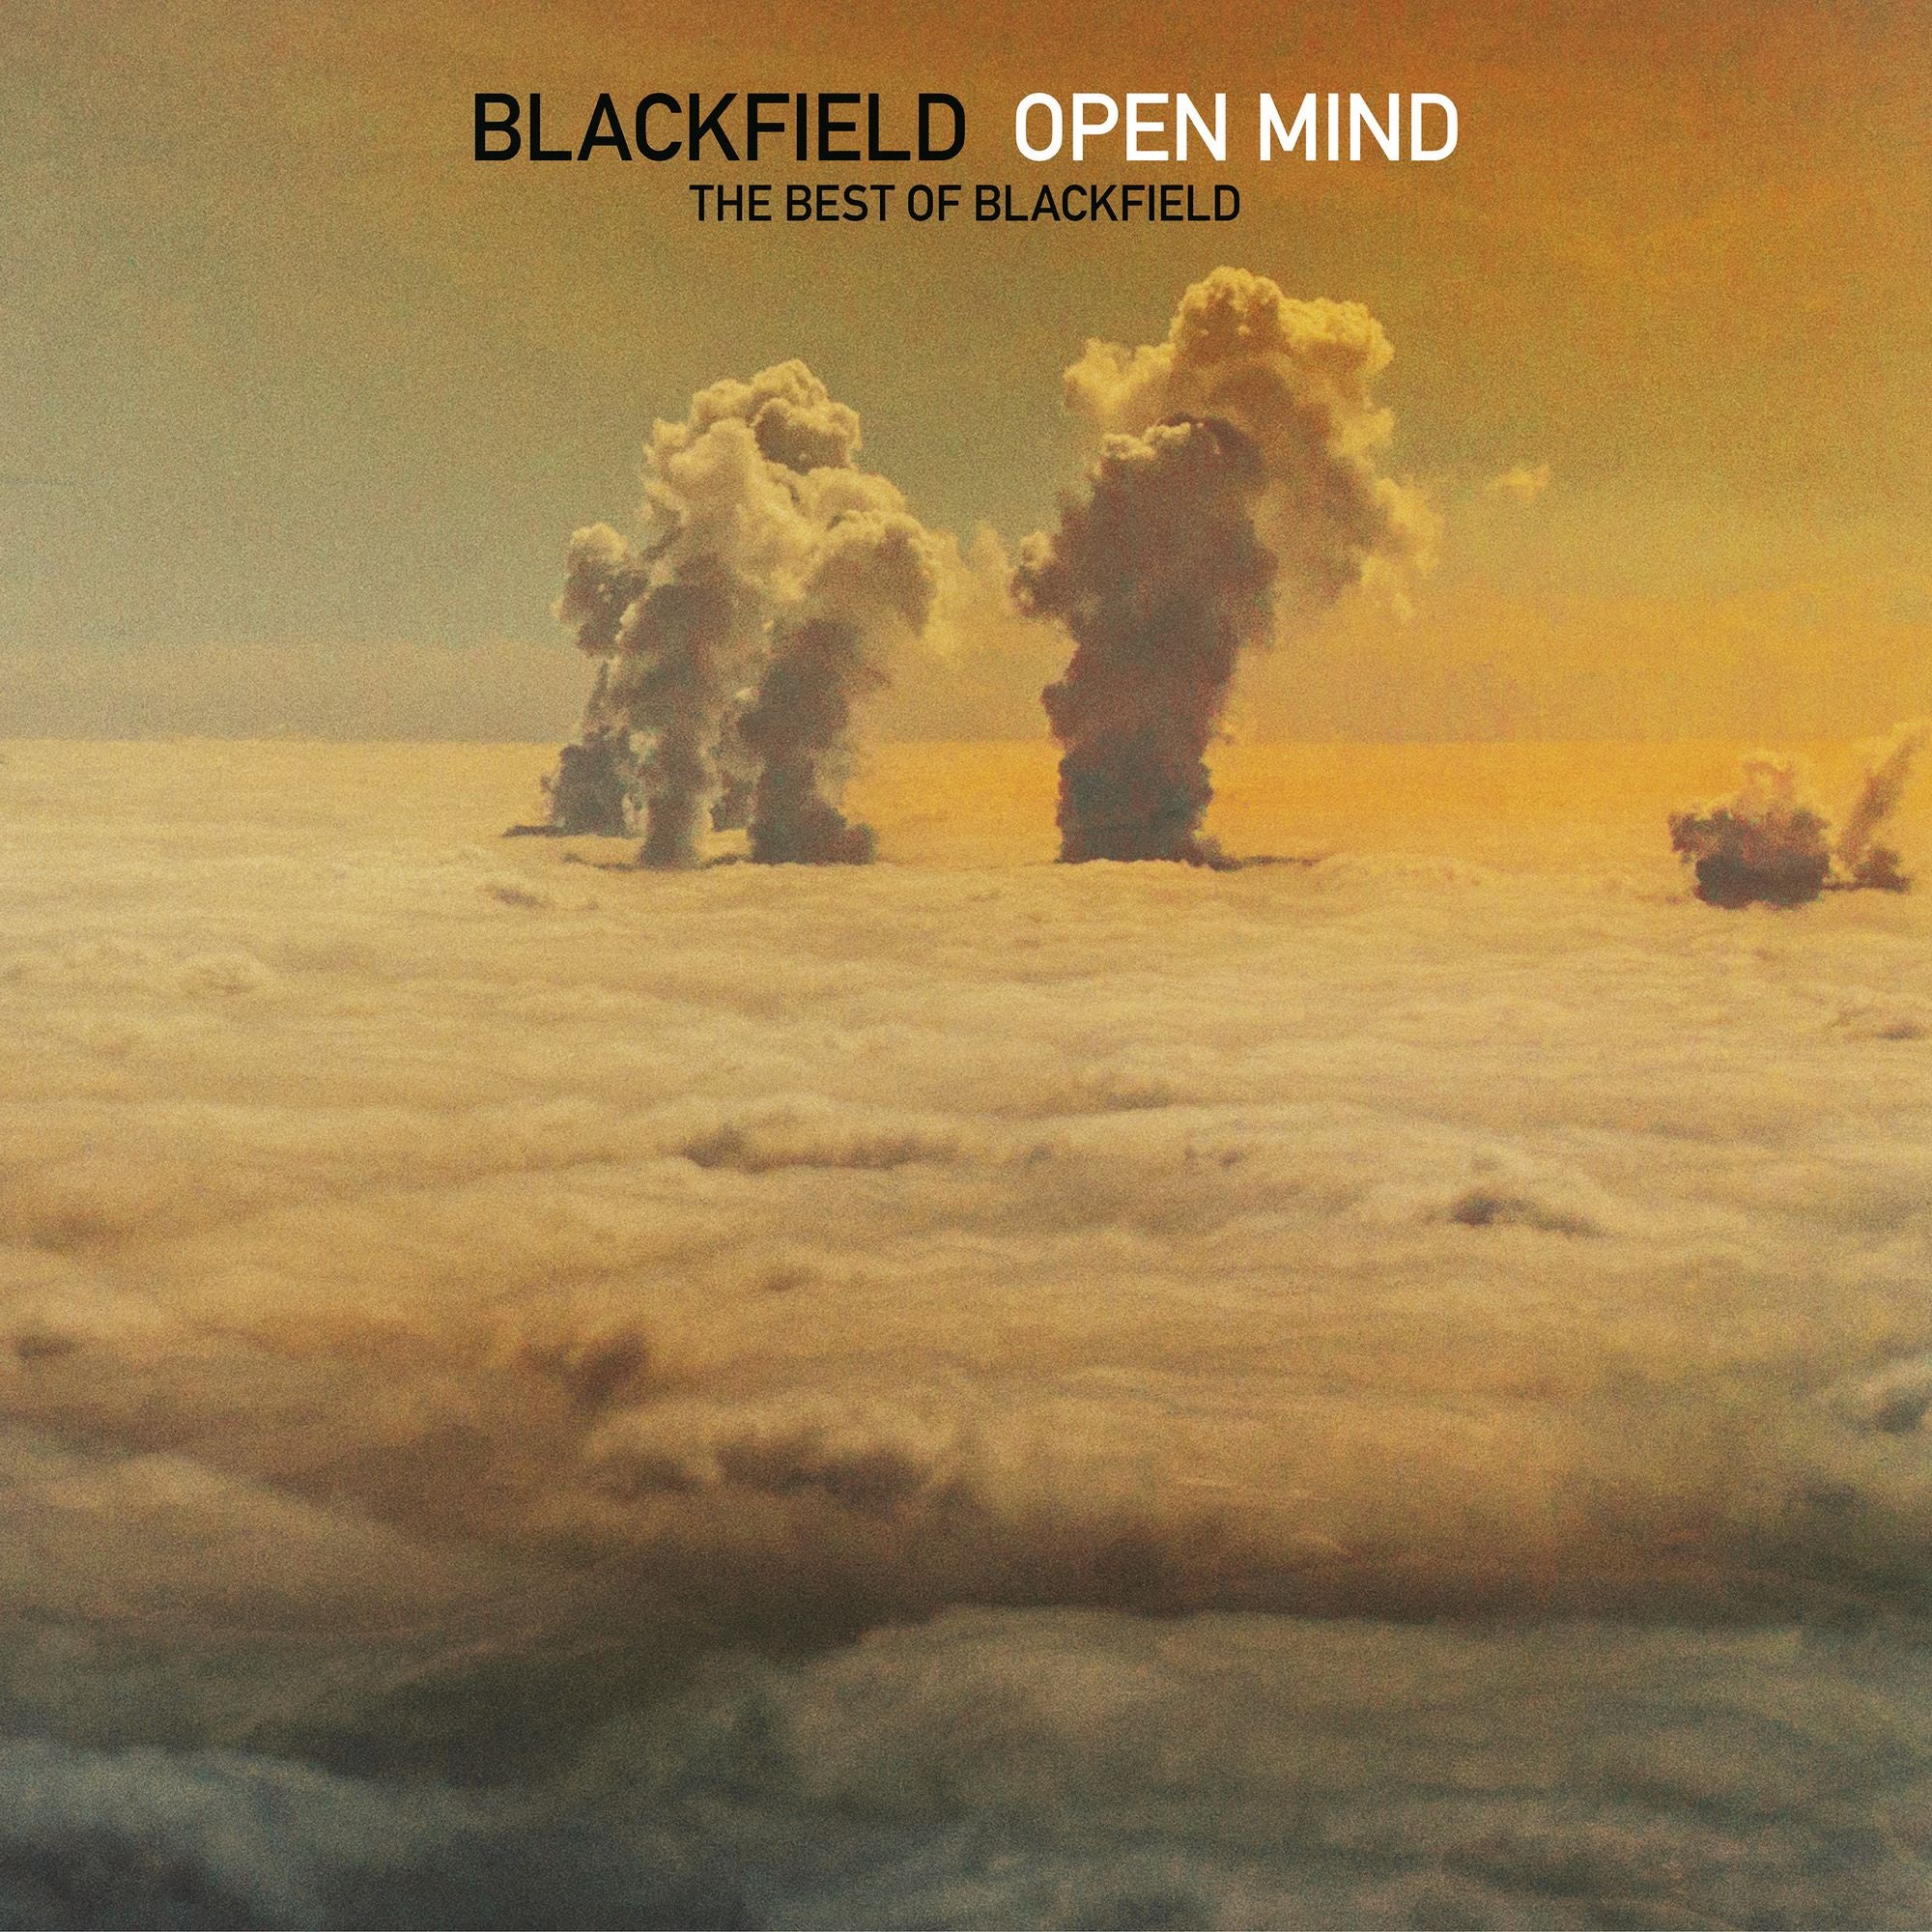 Blackfield (Steven Wilson and Aviv Geffen) - Open Mind: The Best of Blackfield - New Vinyl 2 Lp 2018 Kscope Compilation Pressing with Etched D-Side - Prog / Art Rock